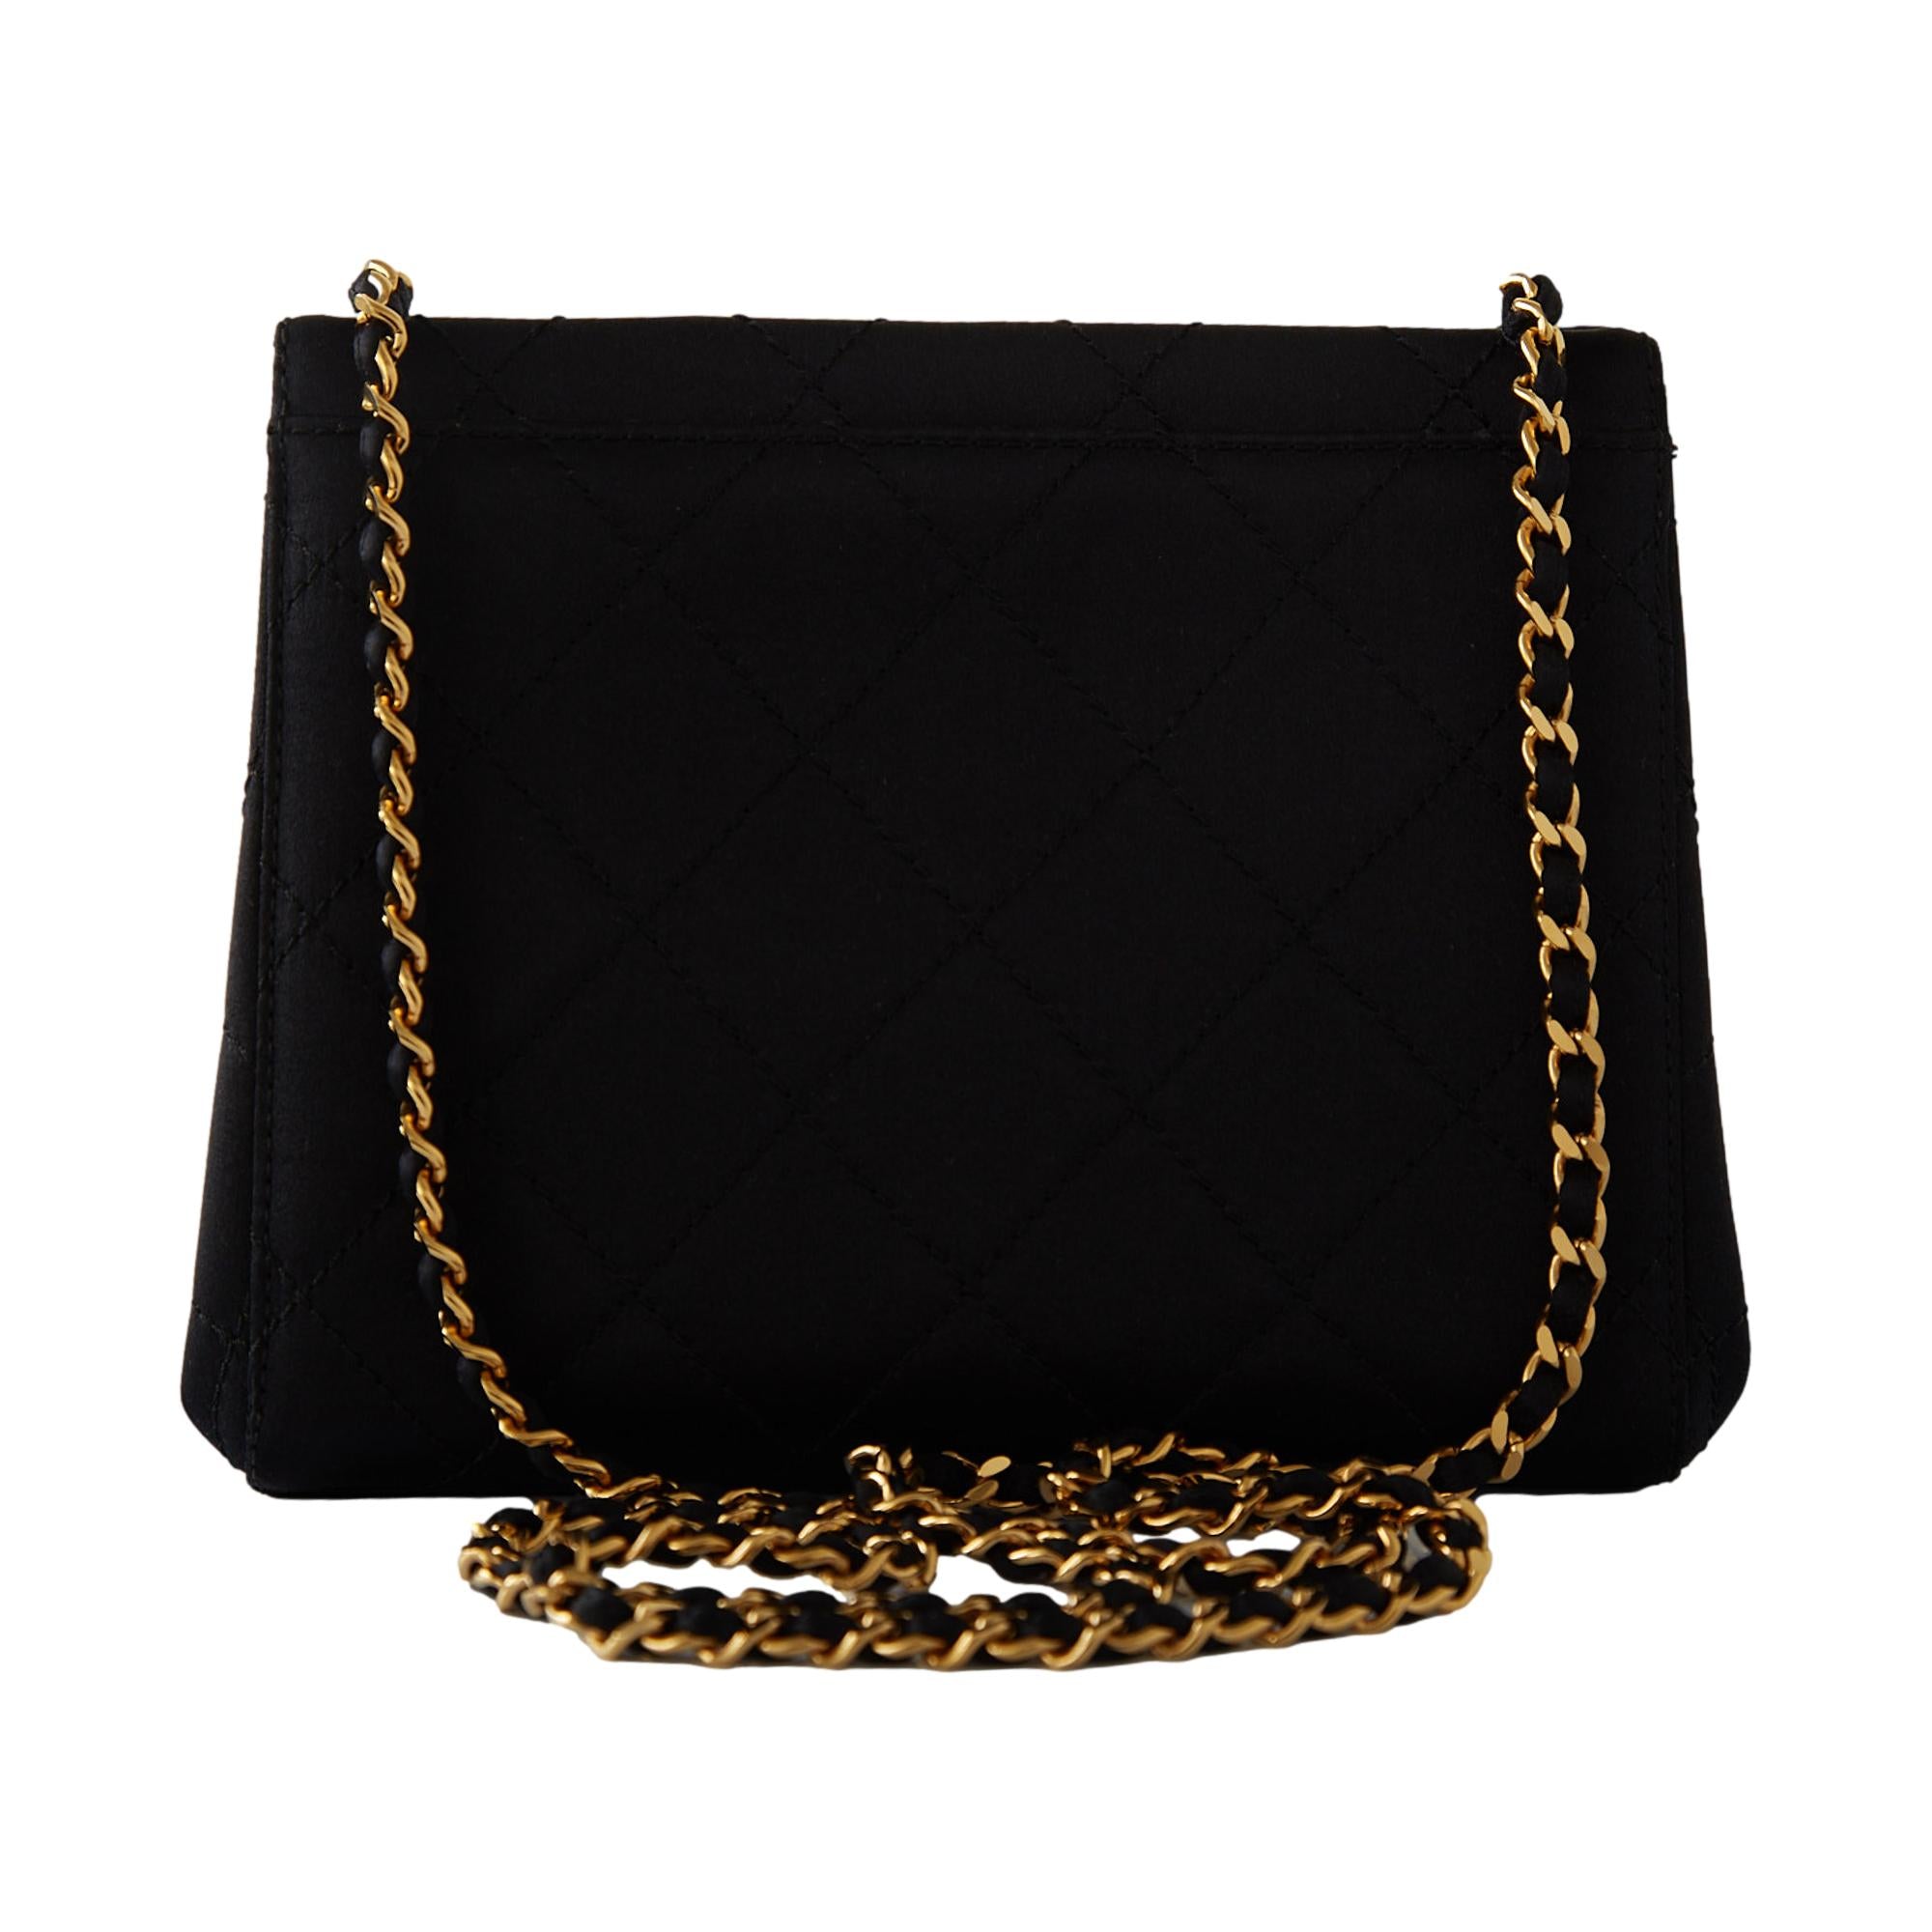 Chanel Black Satin Framed Chain Bag